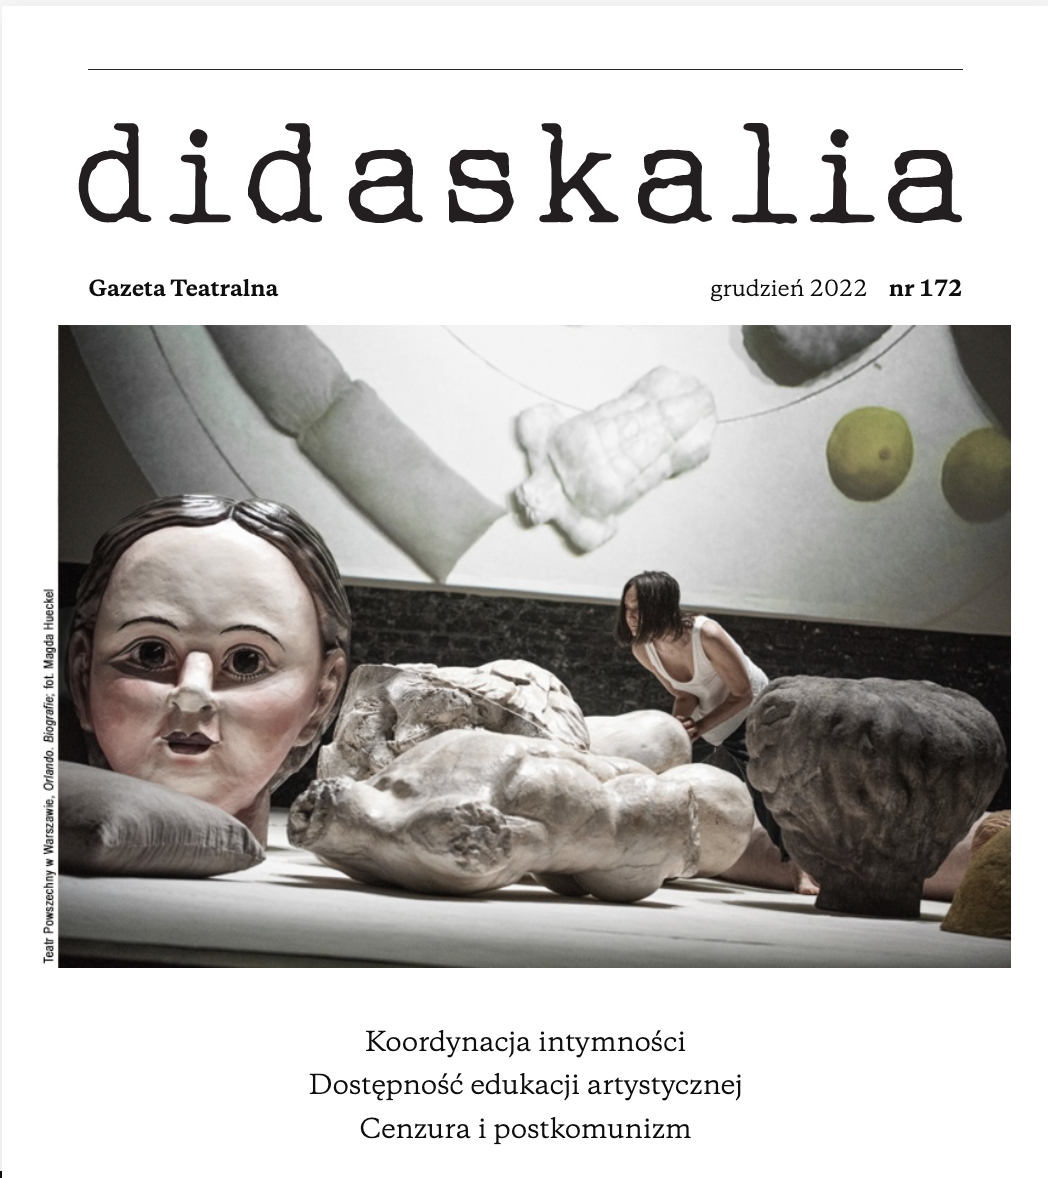 Elusiveness of Architecture – Zuzanna Berendt in conversation with Agata Skwarczyńska Cover Image